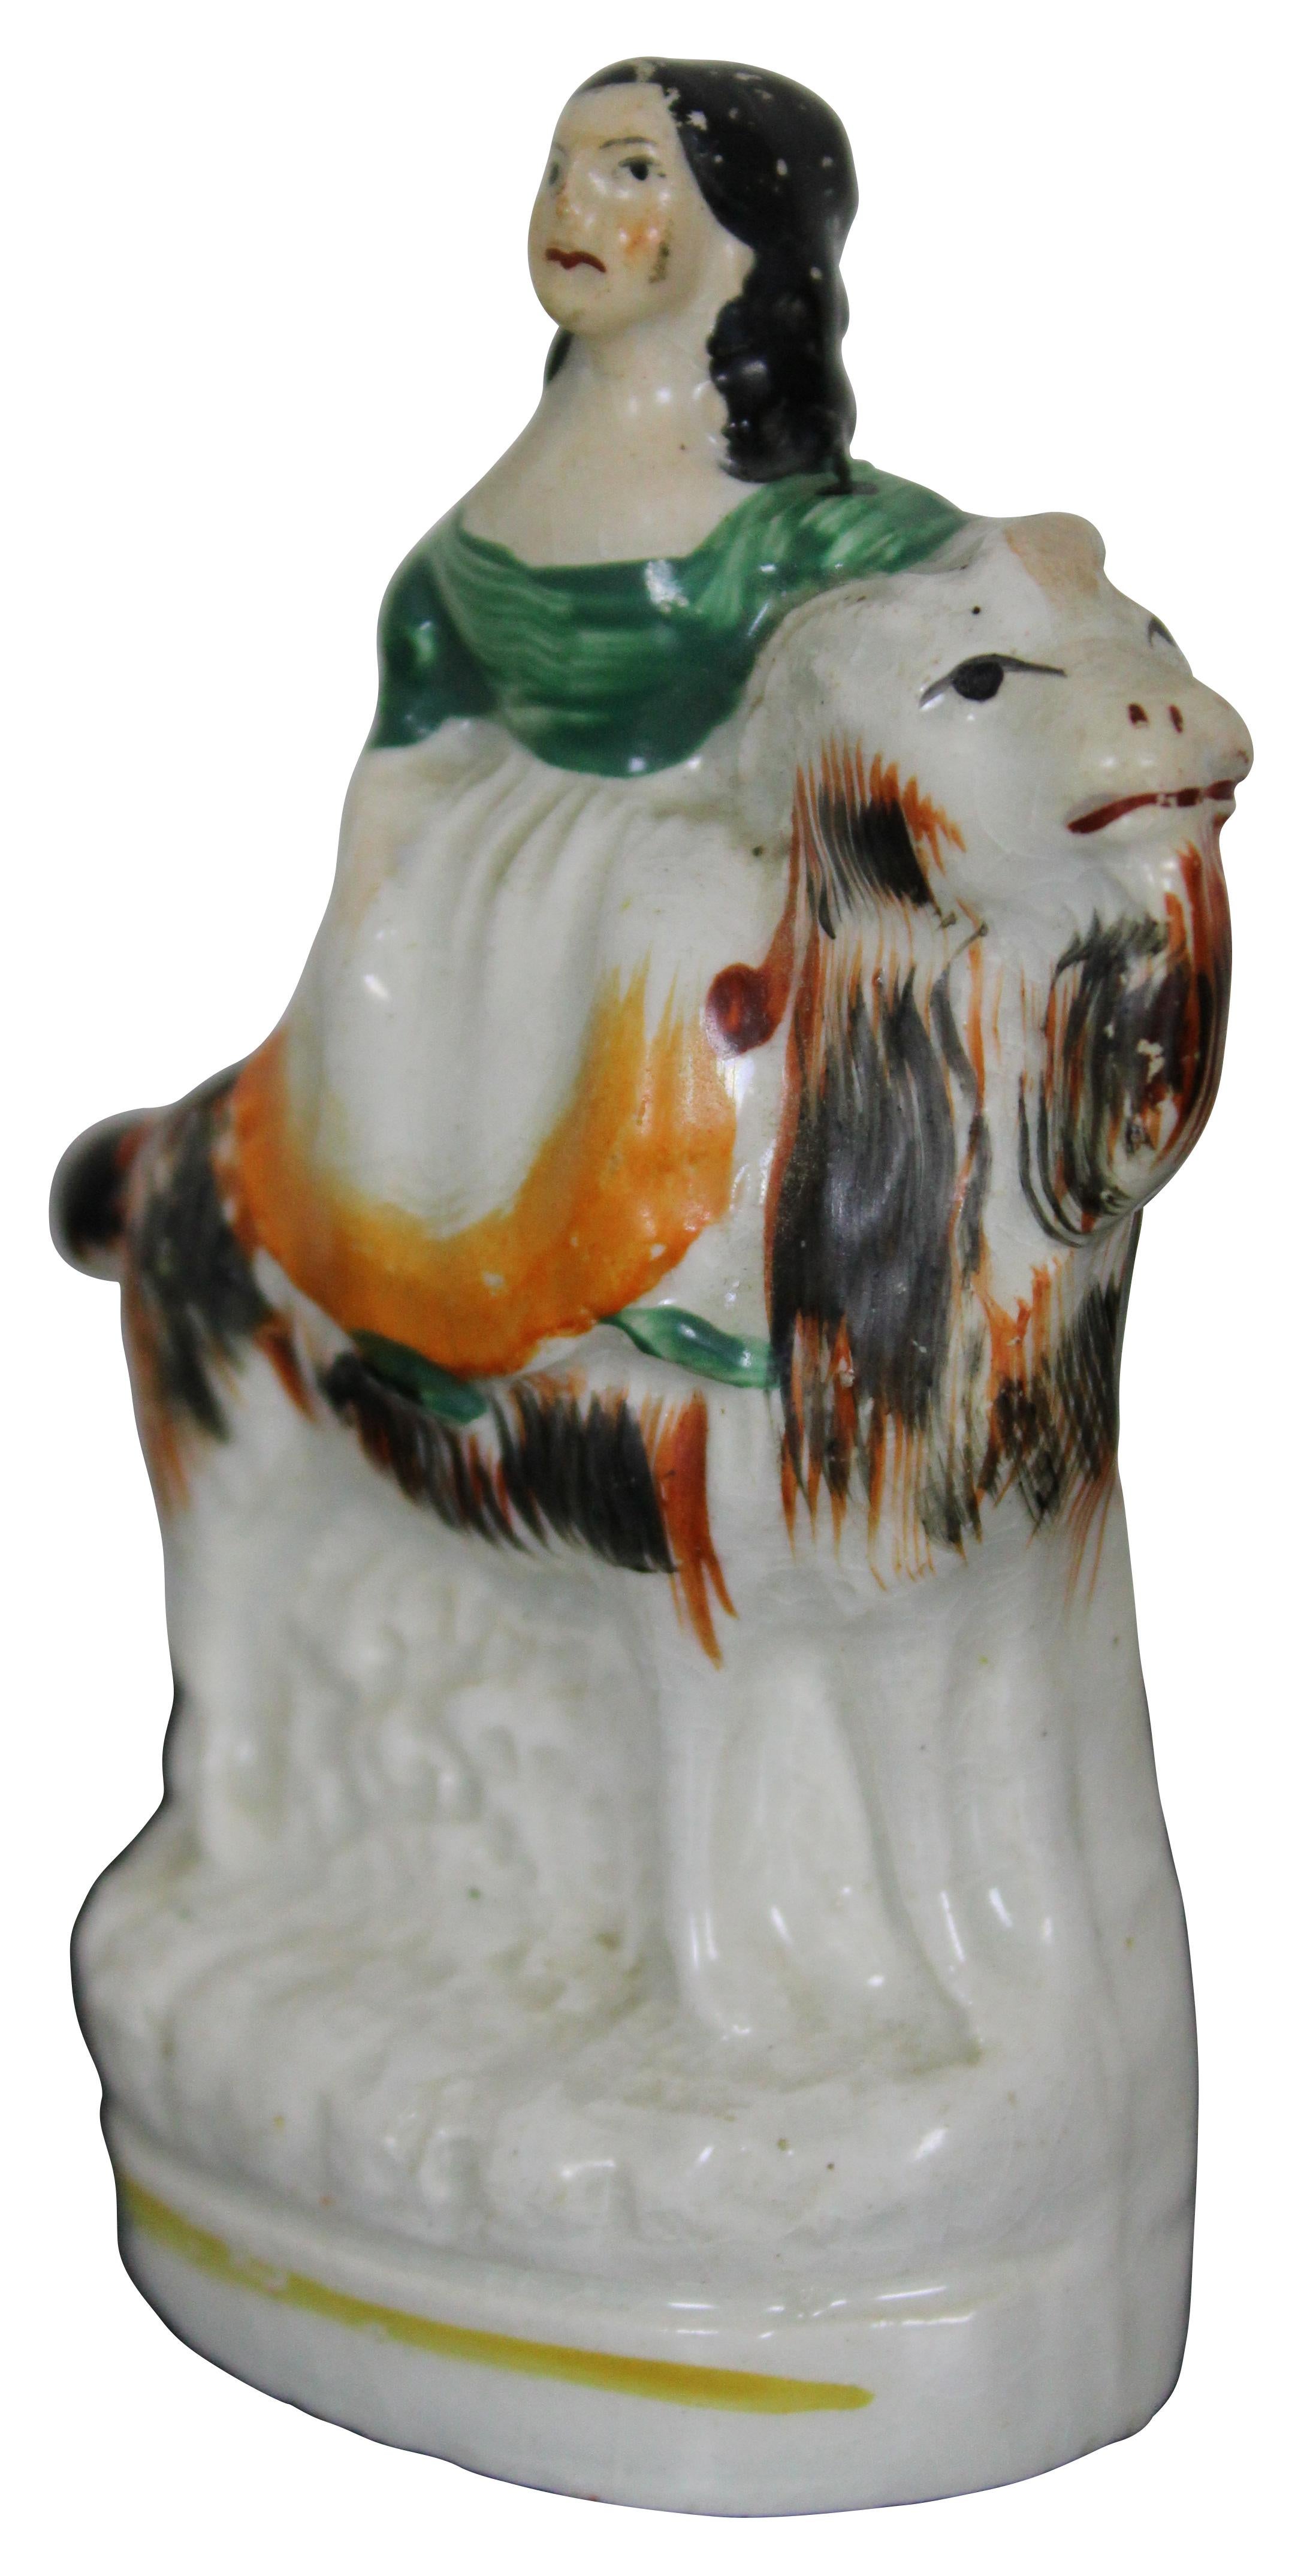 Antique Staffordshire porcelain figurine of a girl riding a goat. Measure: 4